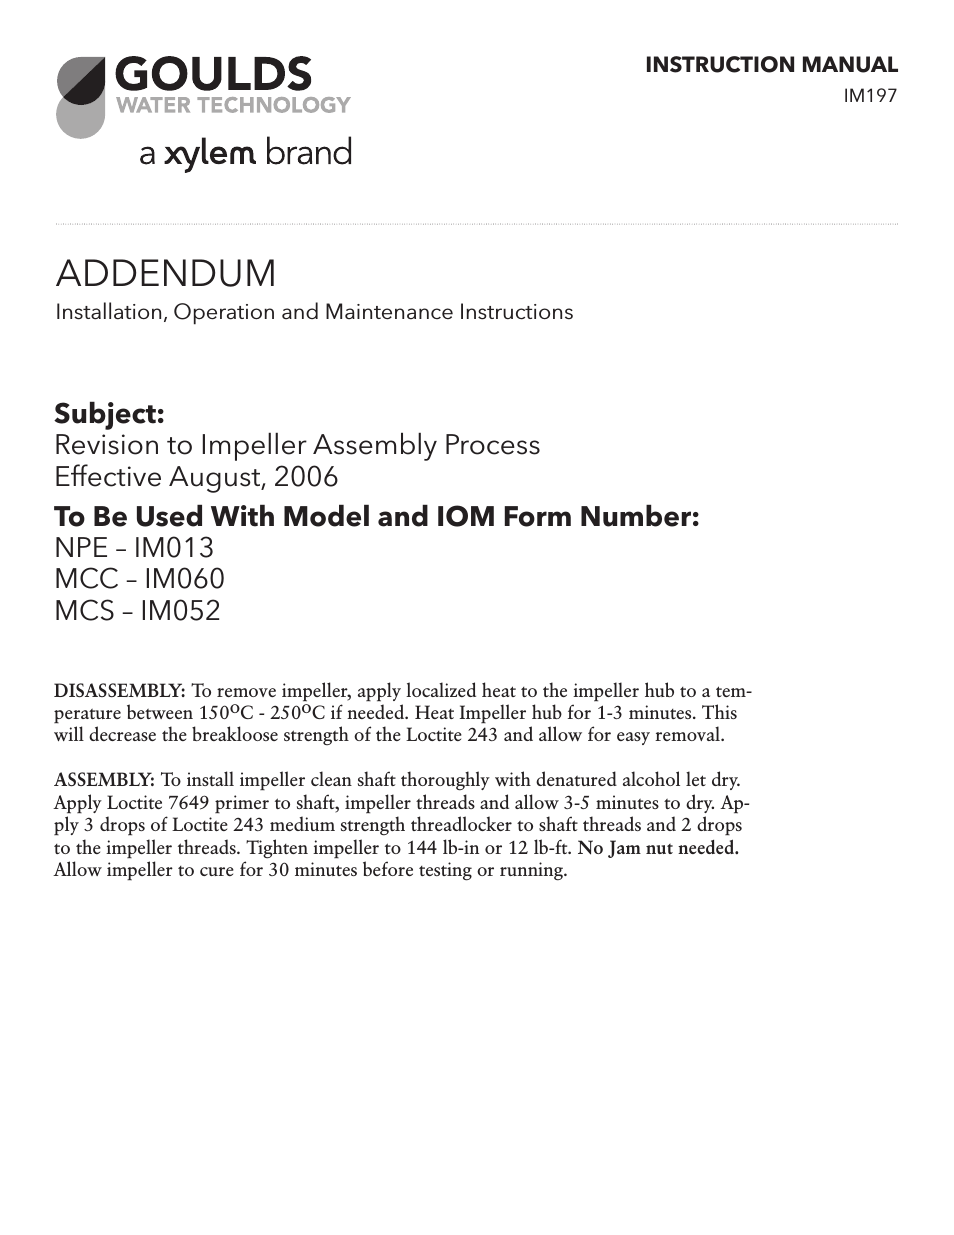 IM197 R01 ADDENDUM Revision to Impeller Assembly Process NPE – IM013 MCC – IM060 MCS – IM052